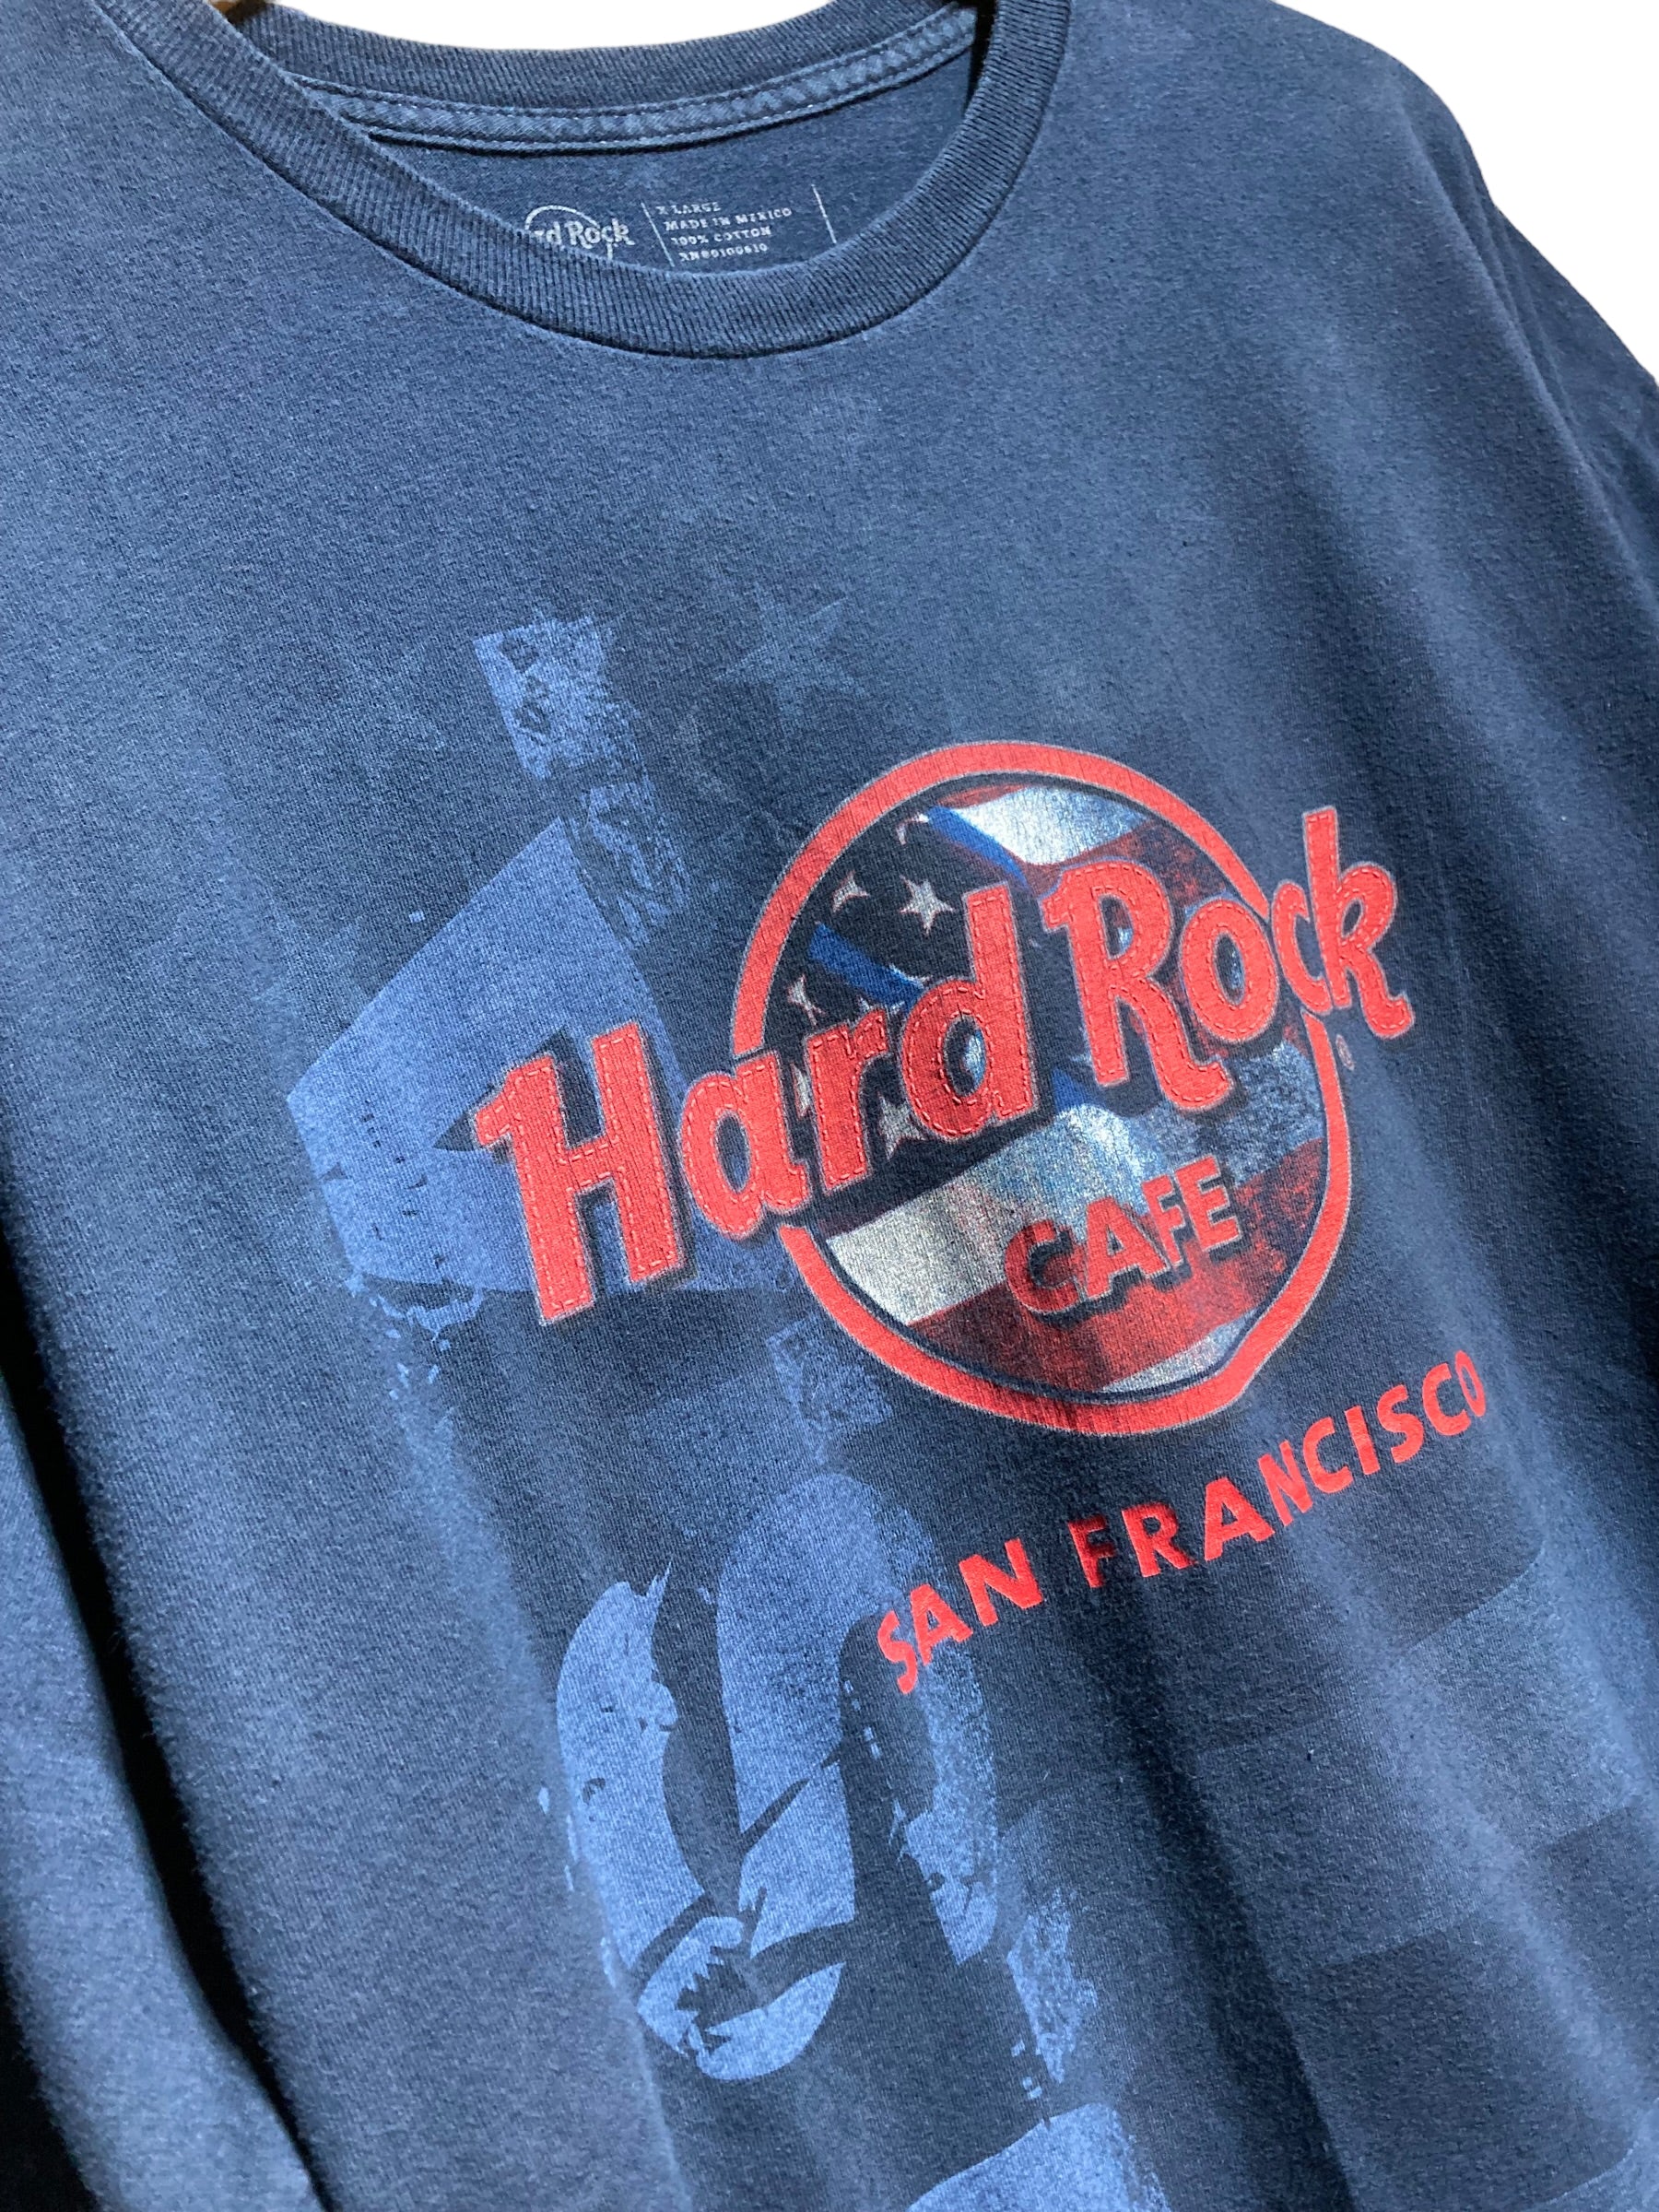 Hard Rock Cafe ハードロック ハードロックカフェ SAN FRANCISCO